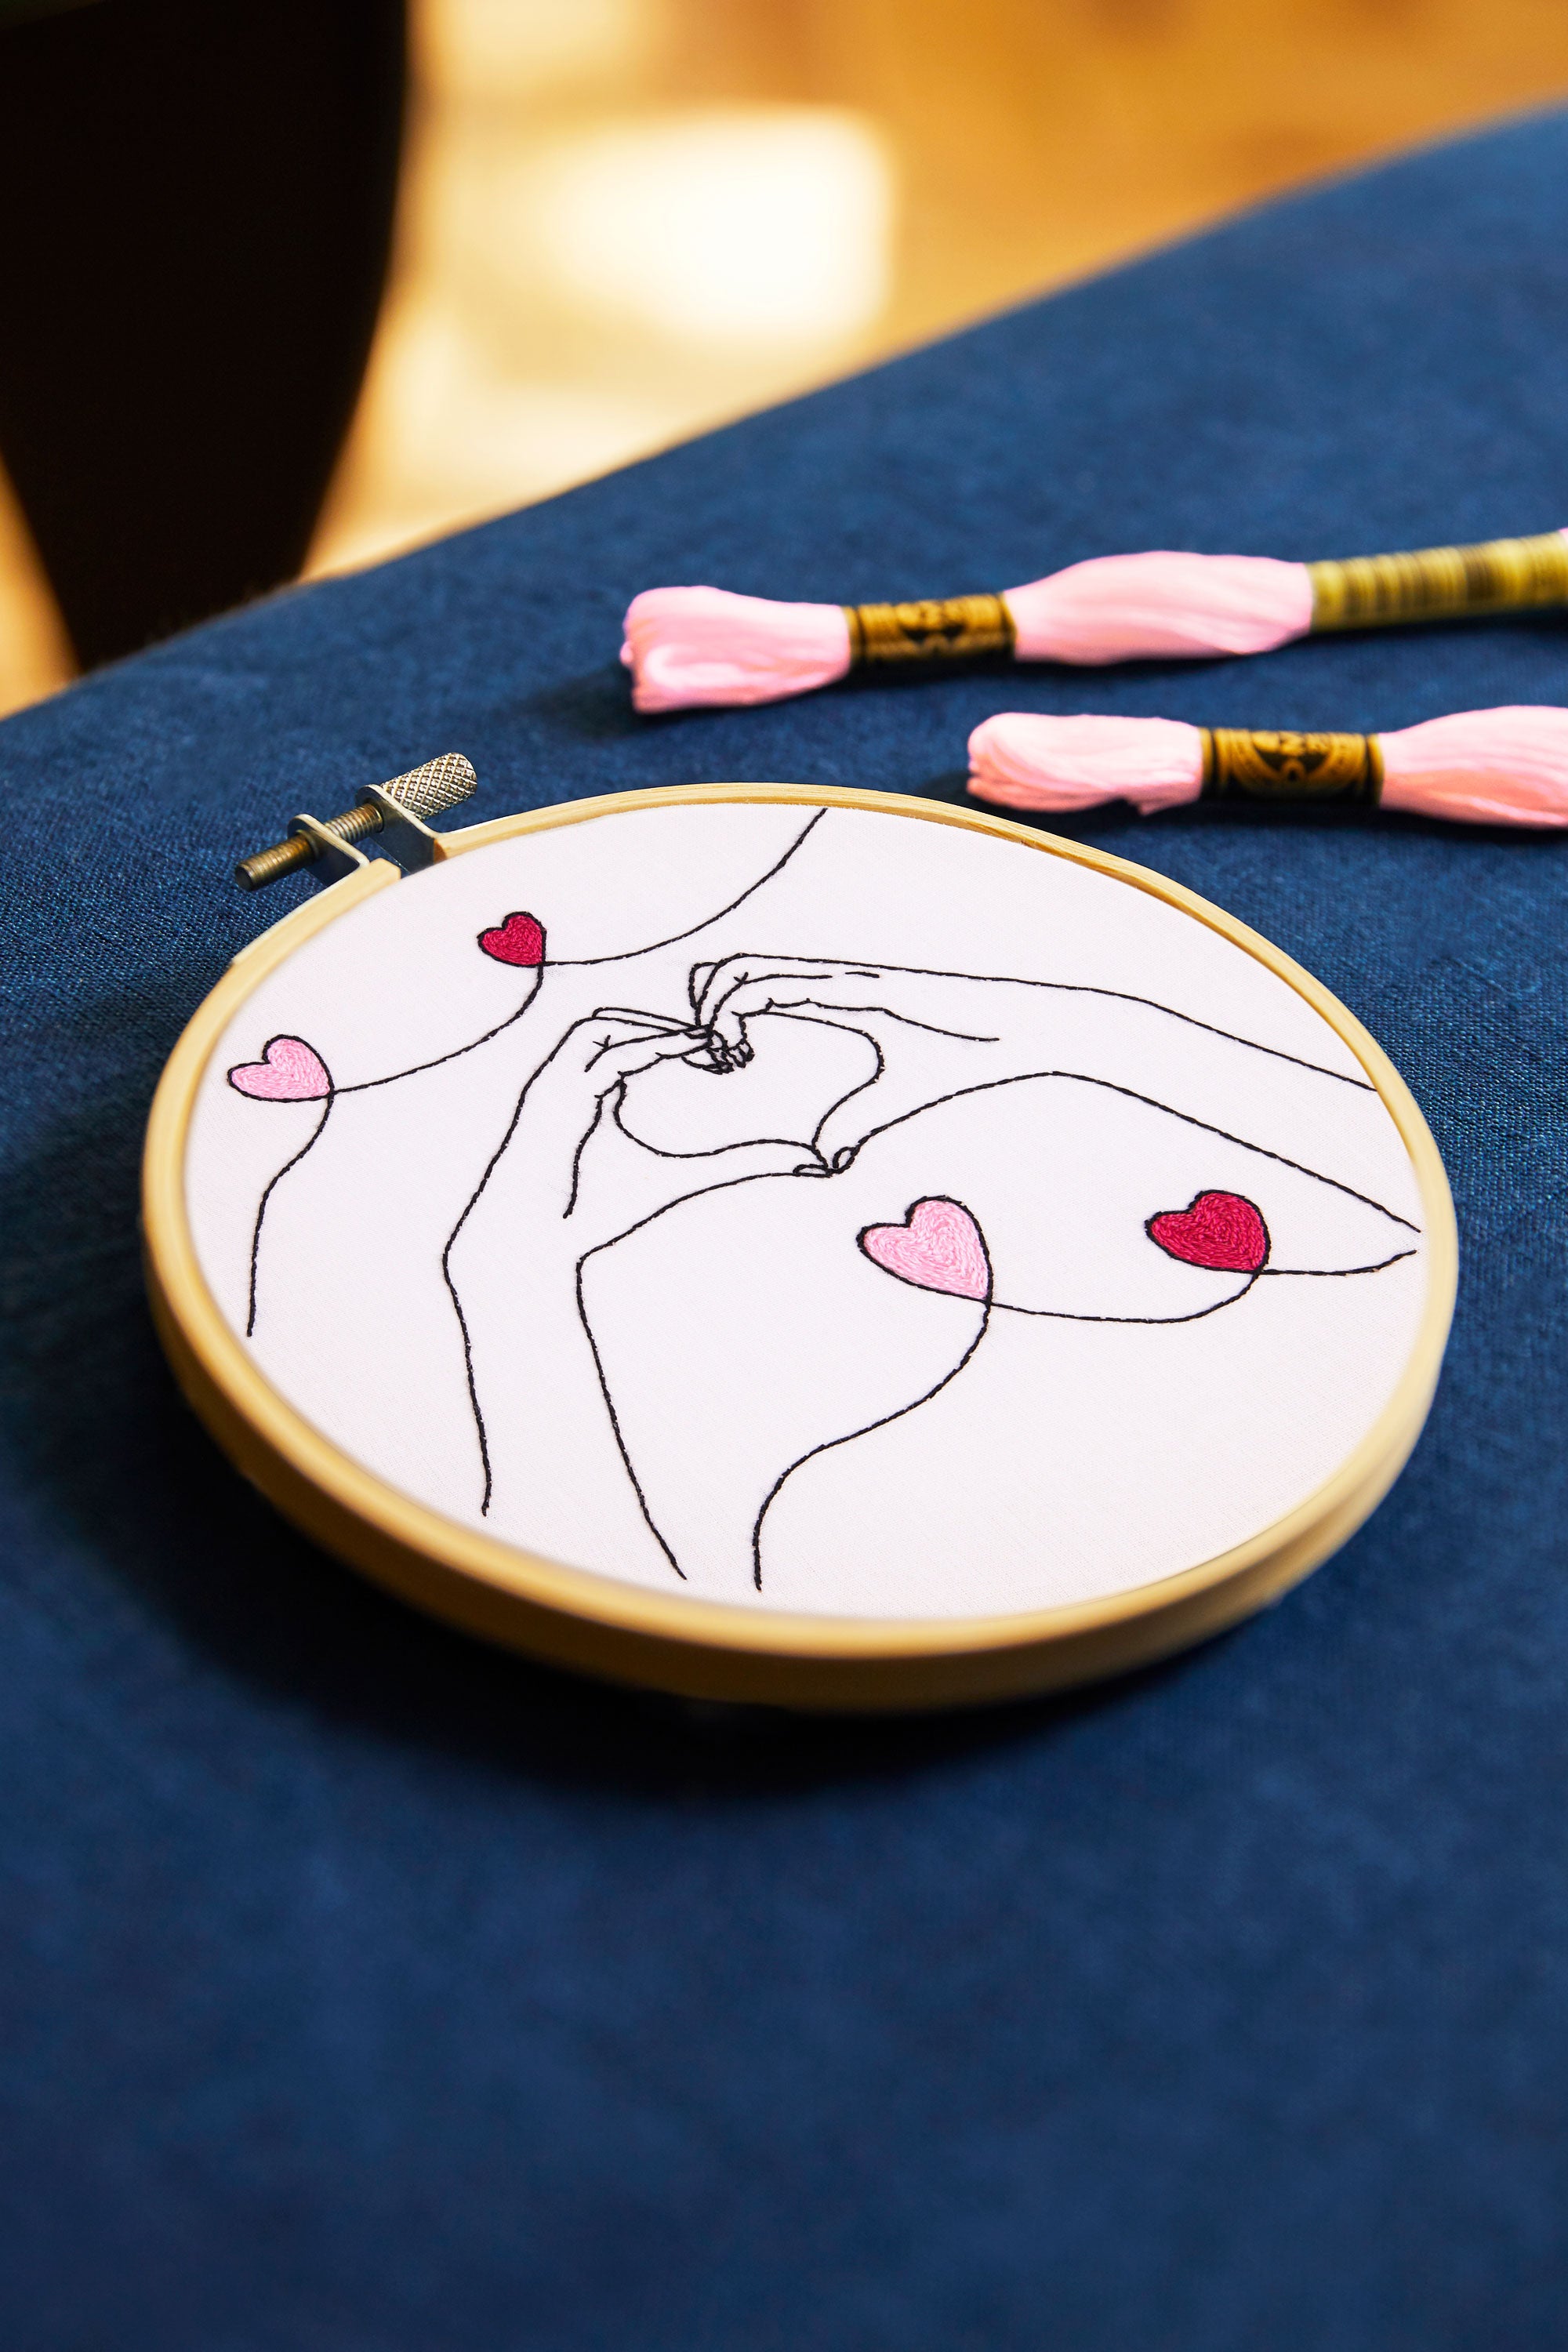 DMC Heart Hands by Jenni Davis (Embroidery Kit)